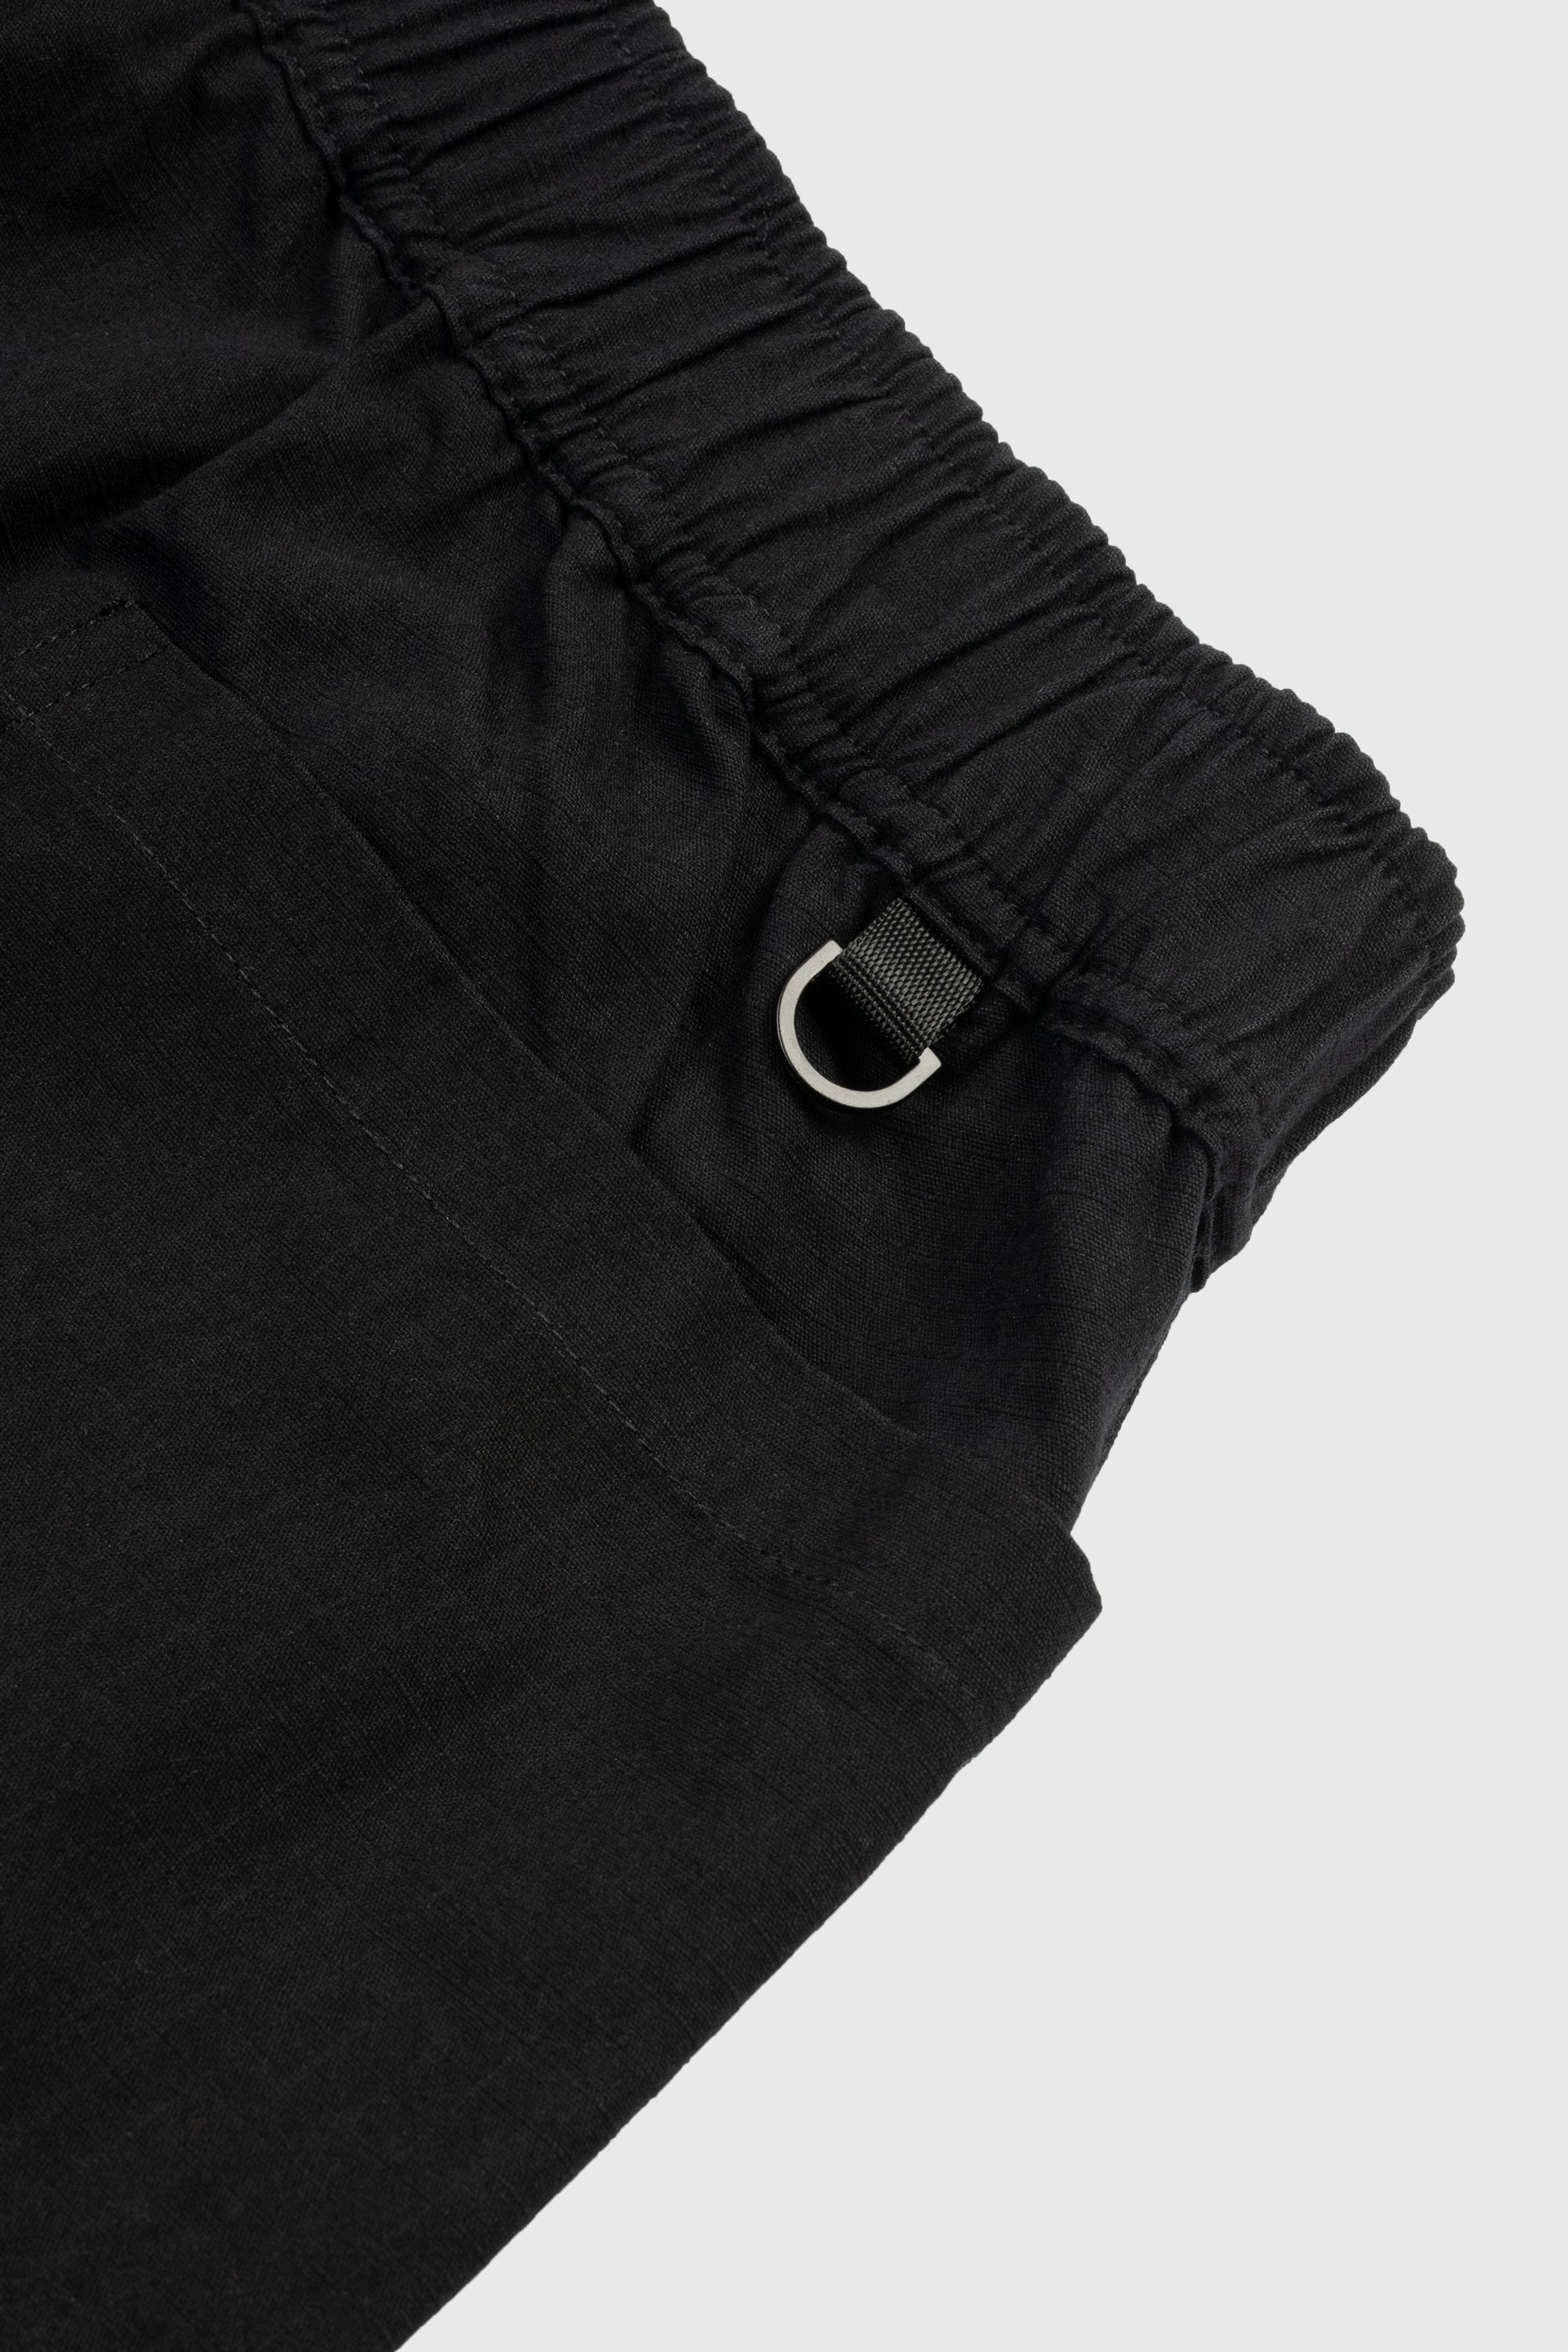 trechter Geruststellen Vakman Nexus Ripstop Cargo Shorts (Black) - The Official Brand